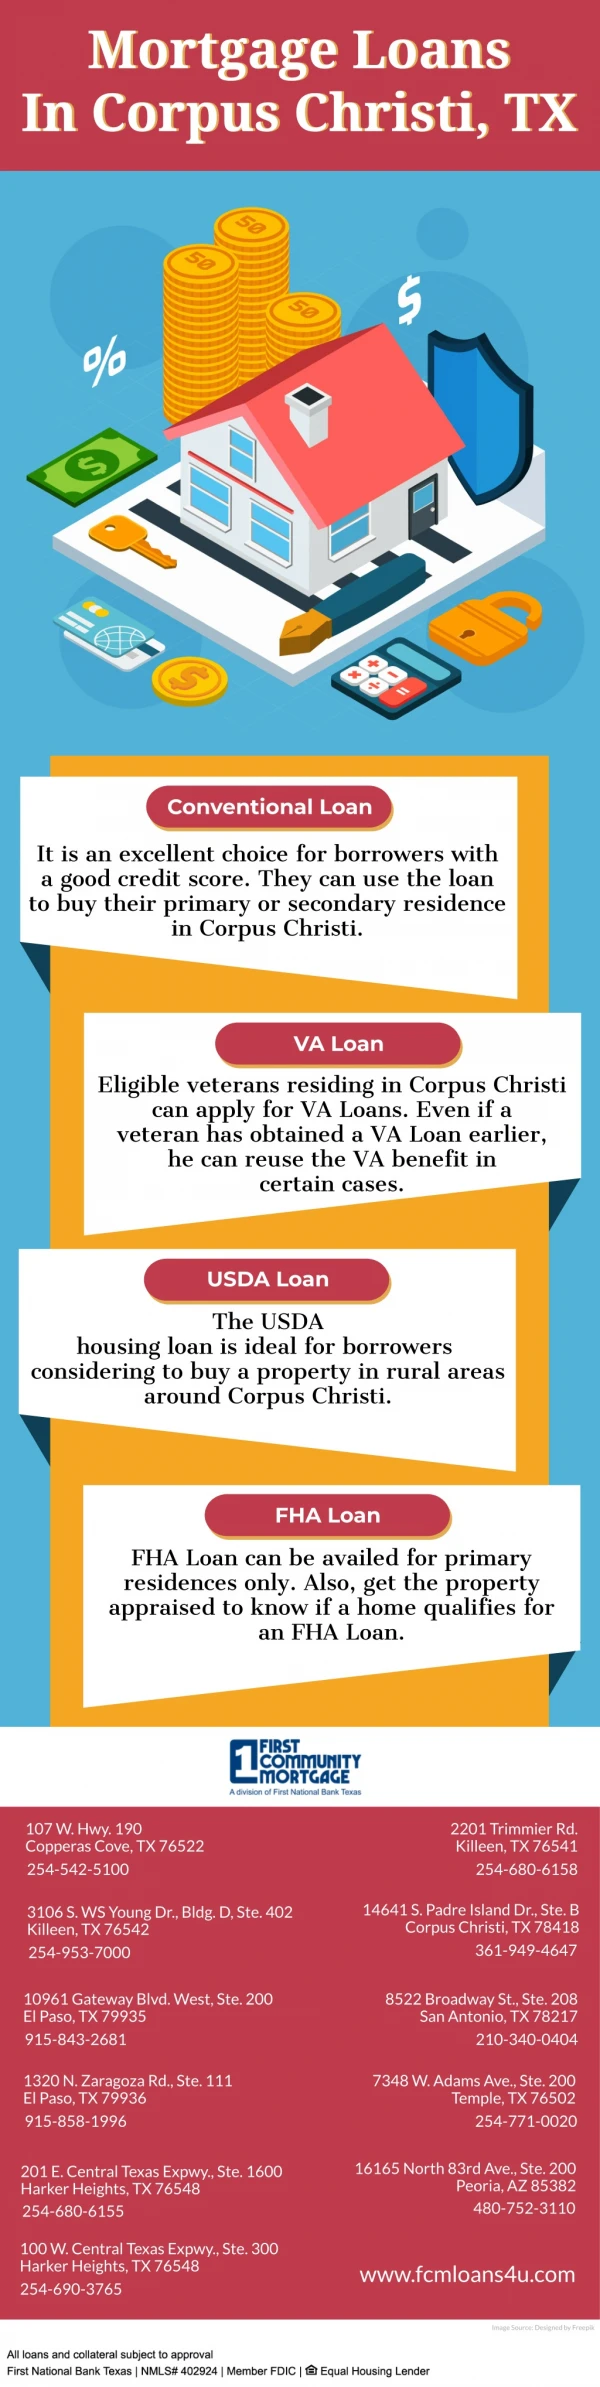 Mortgage Loans In Corpus Christi TX